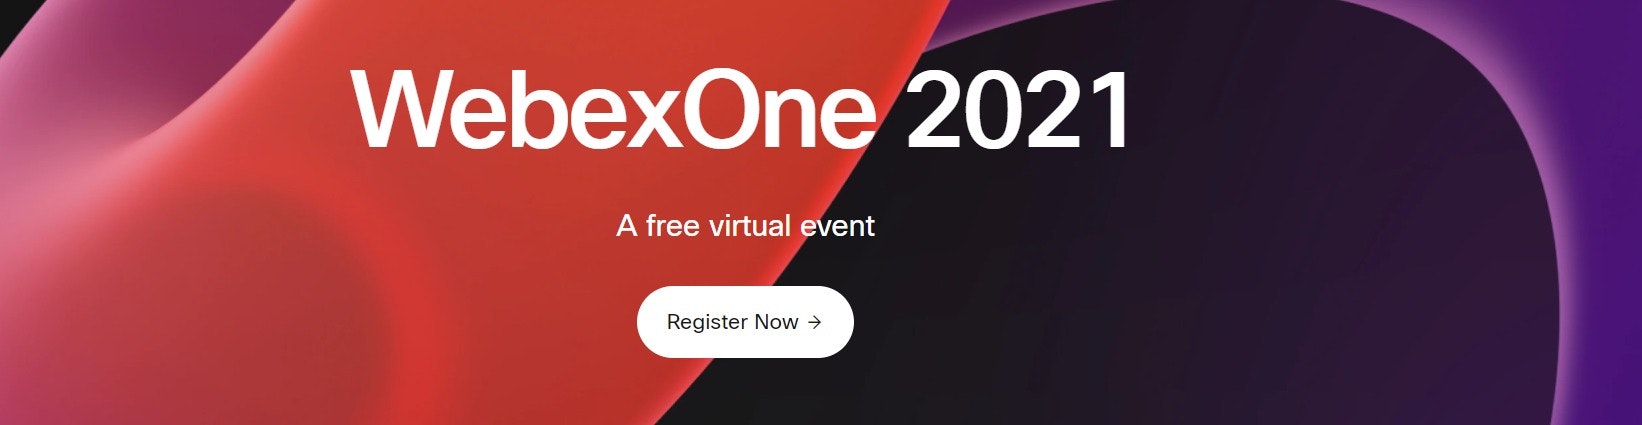 Cover image of WebexOne 2021